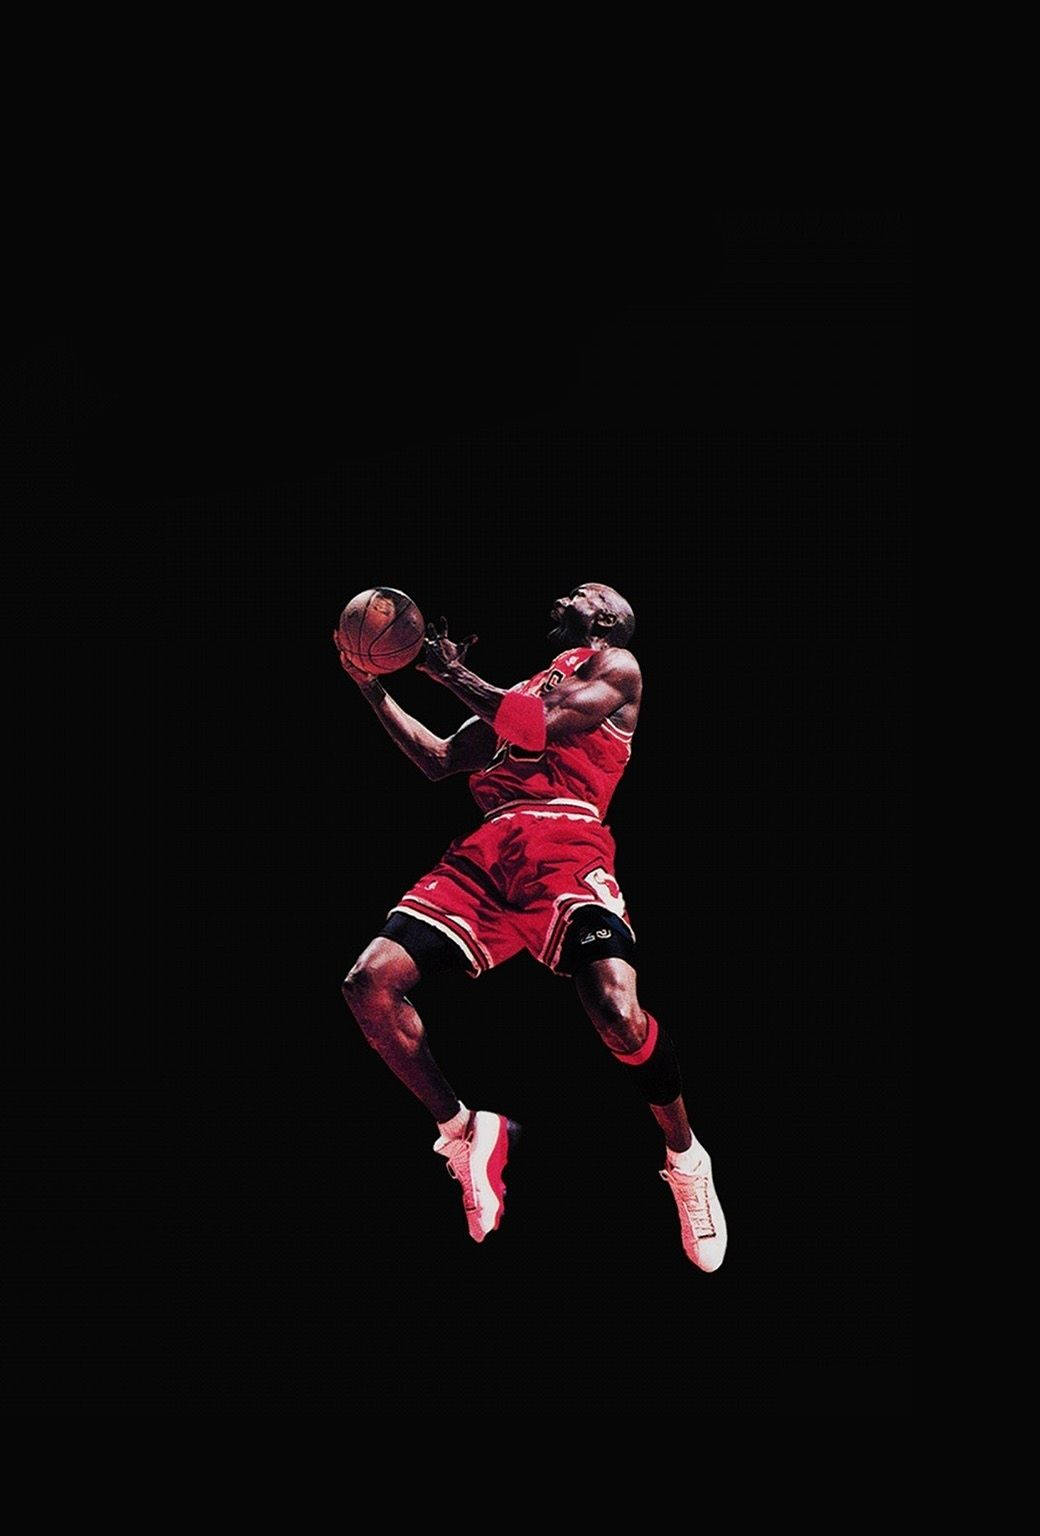 Cool Nike Michael Jordan Poster Background